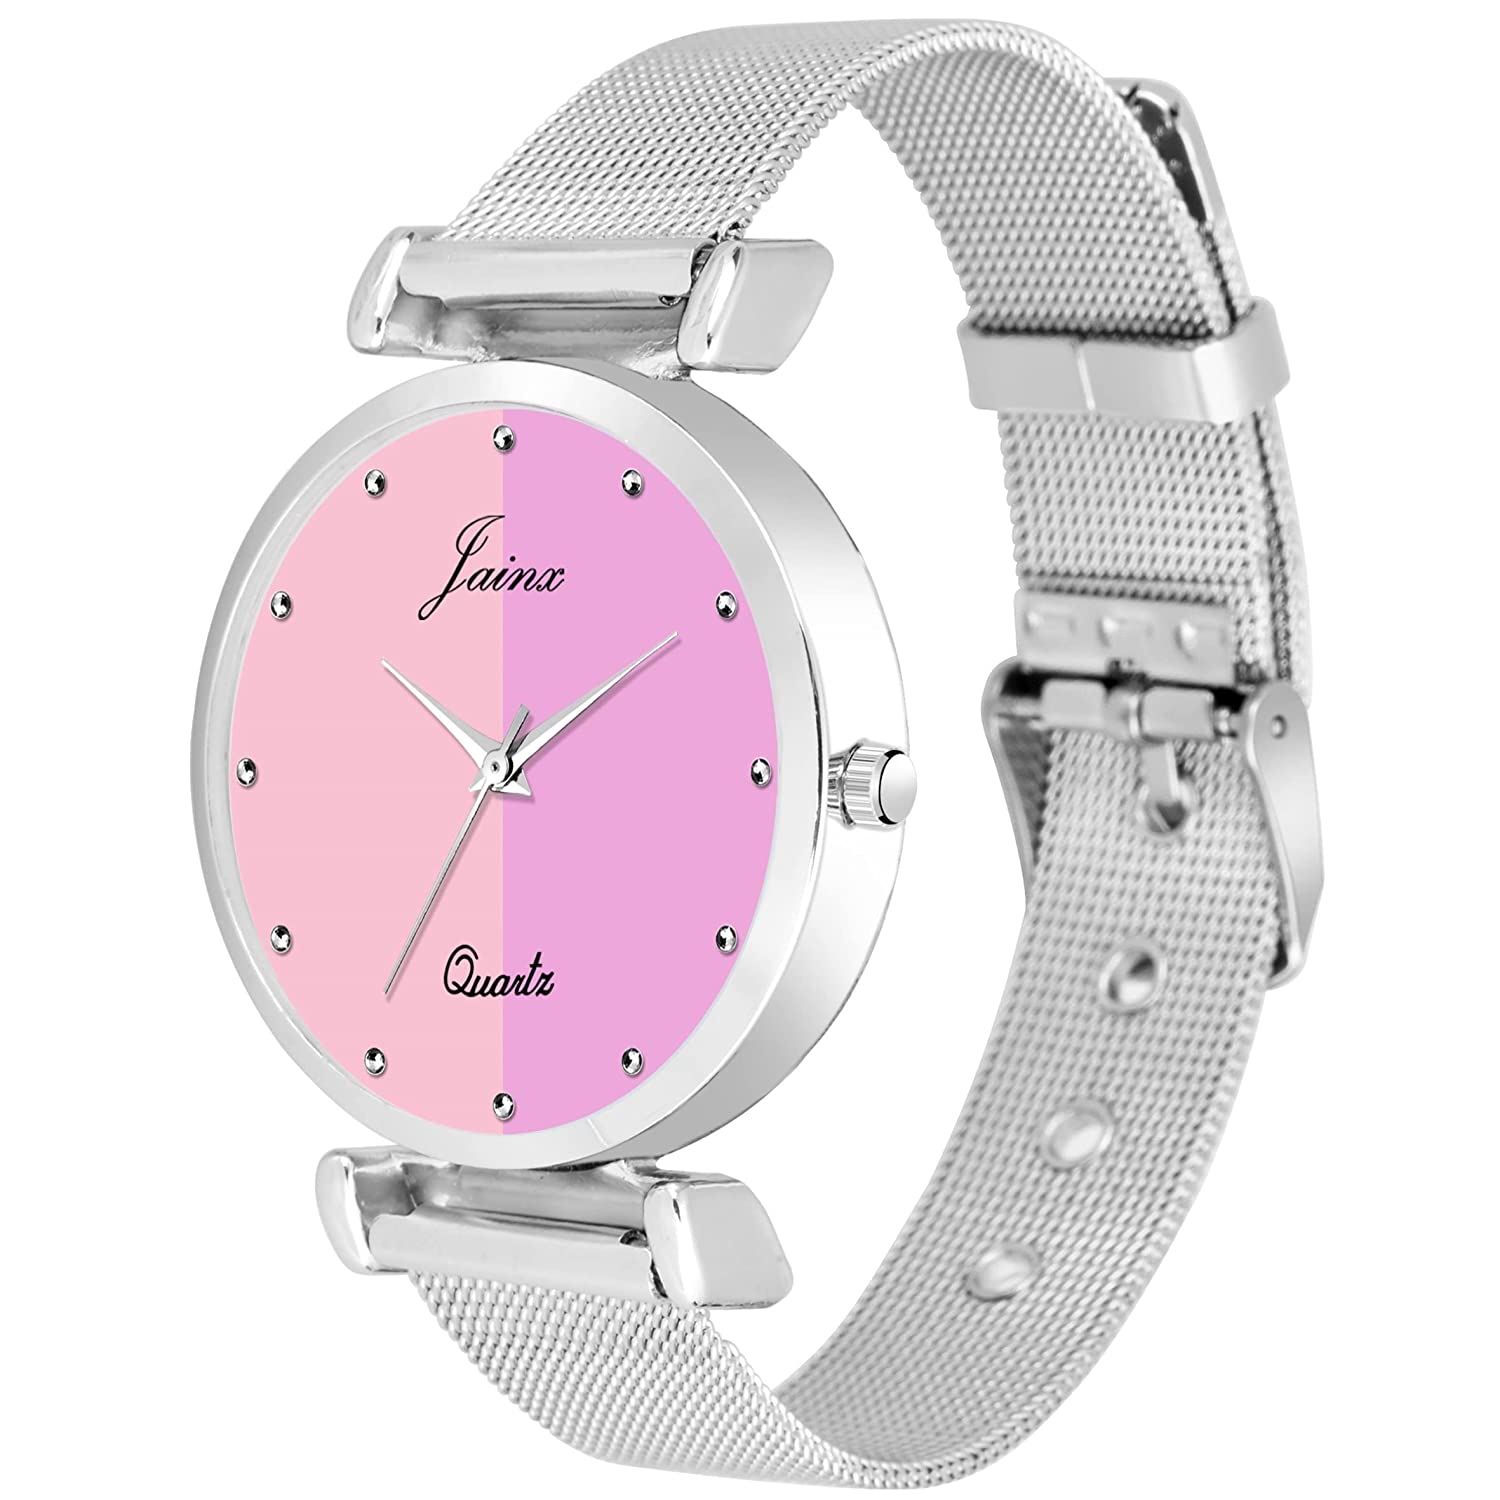 Pink Dial Steel Mesh Chain Analog Watch - For Women JW672 - Jainx Store